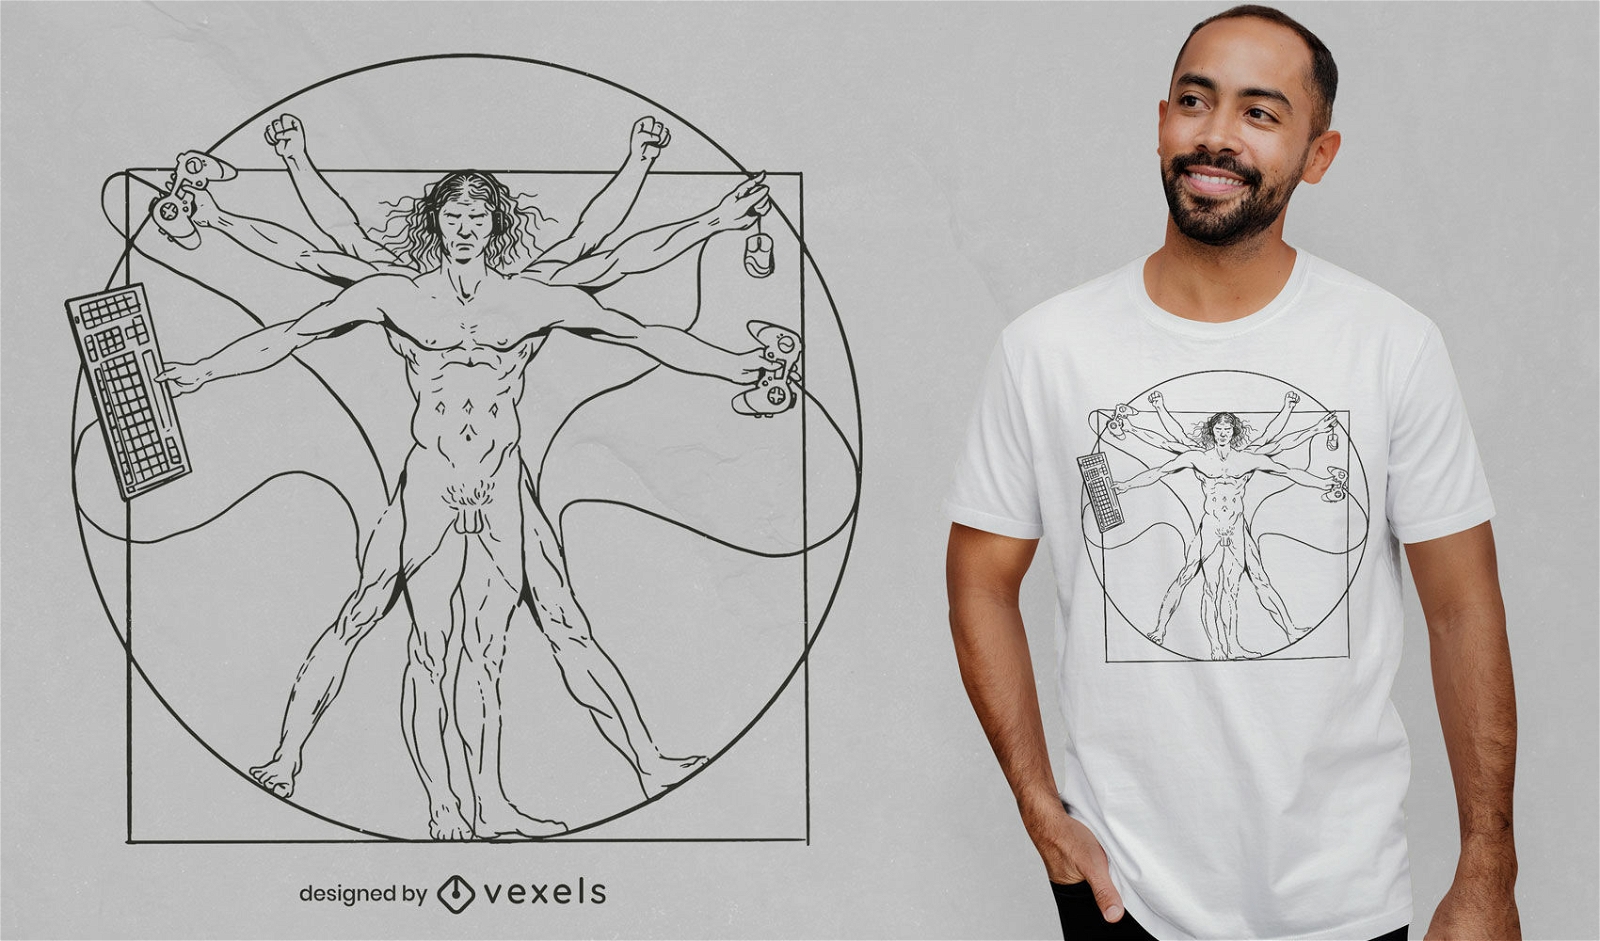 Vitruvian man playing videogames t-shirt design